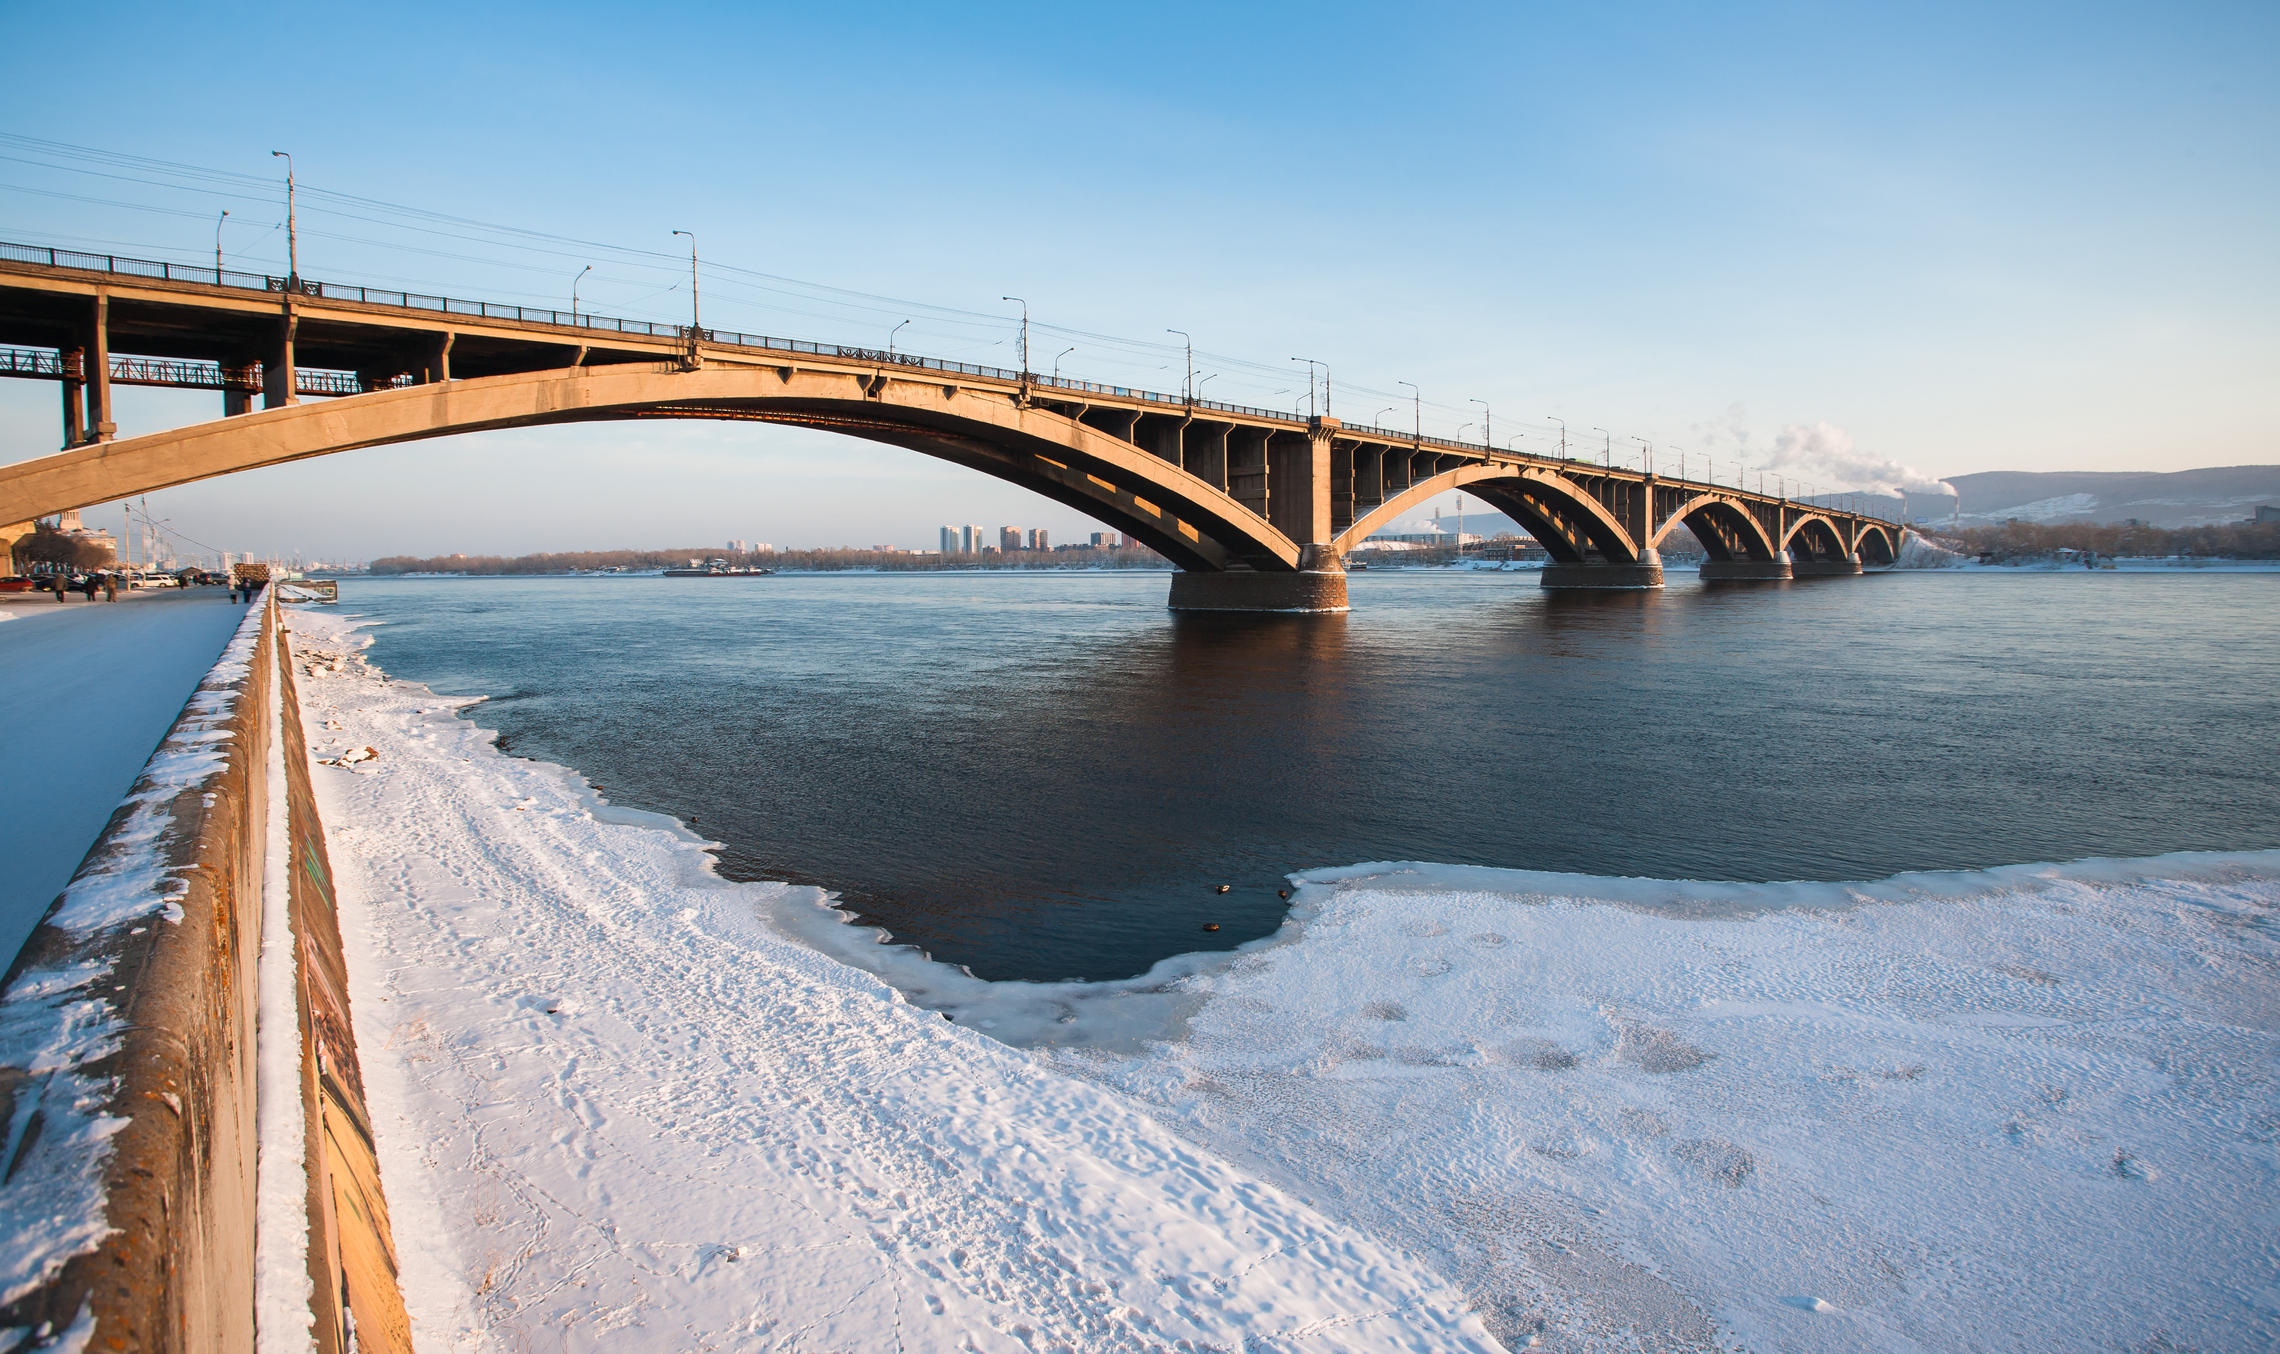 Красноярск зимой фото